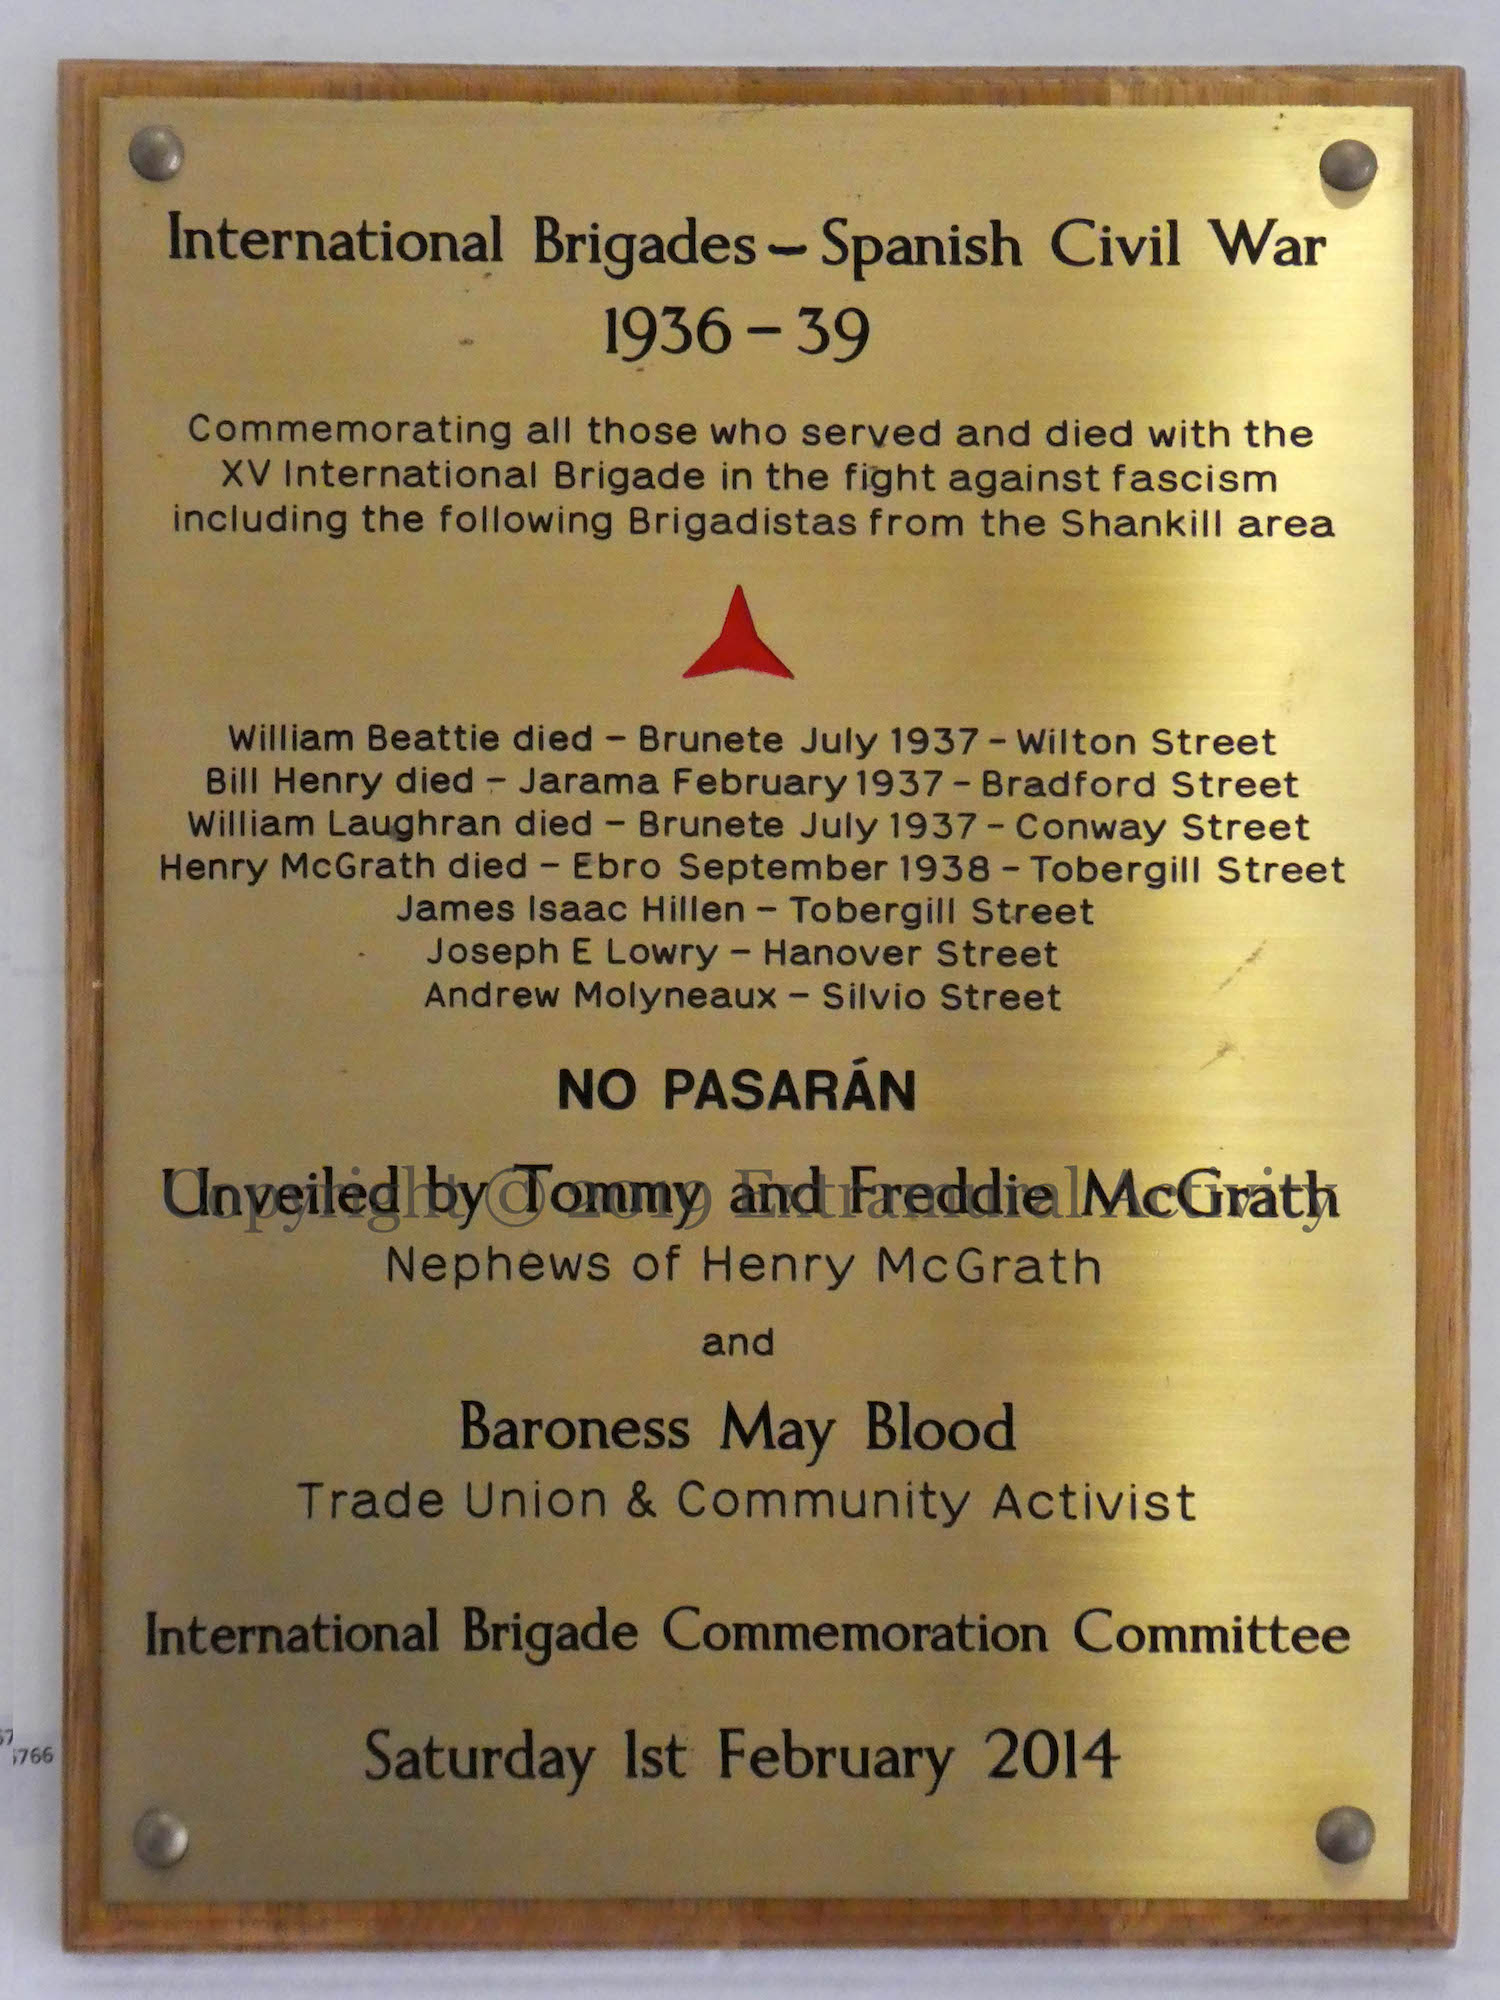 06575-2019-04-27-international-brigade-plaque.jpg